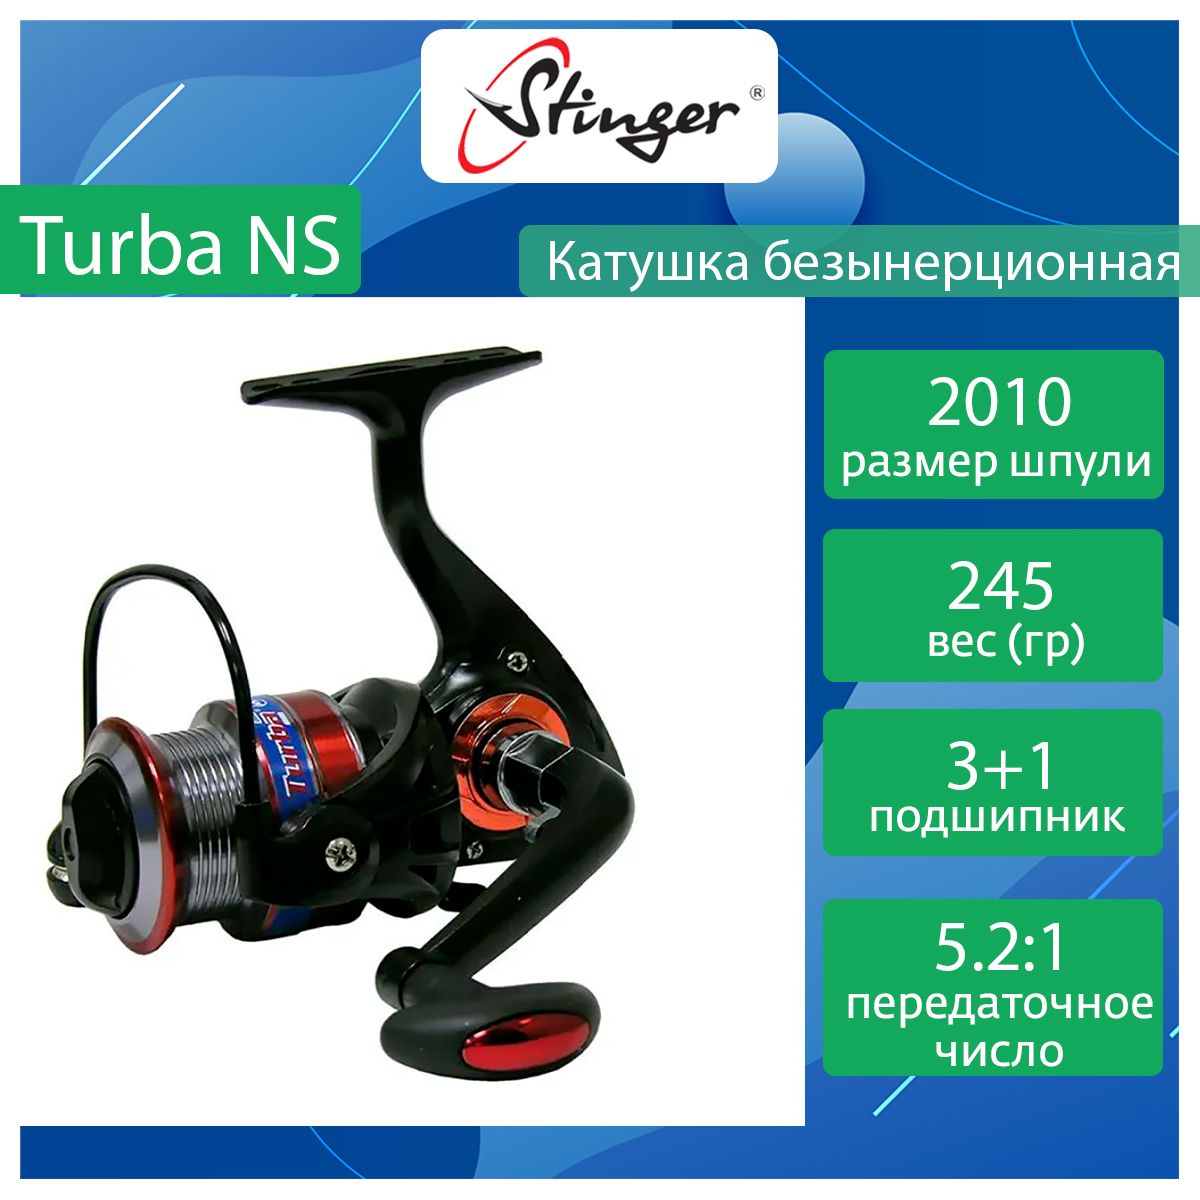 Катушка для рыбалки безынерционная Stinger Turba NS ef56844